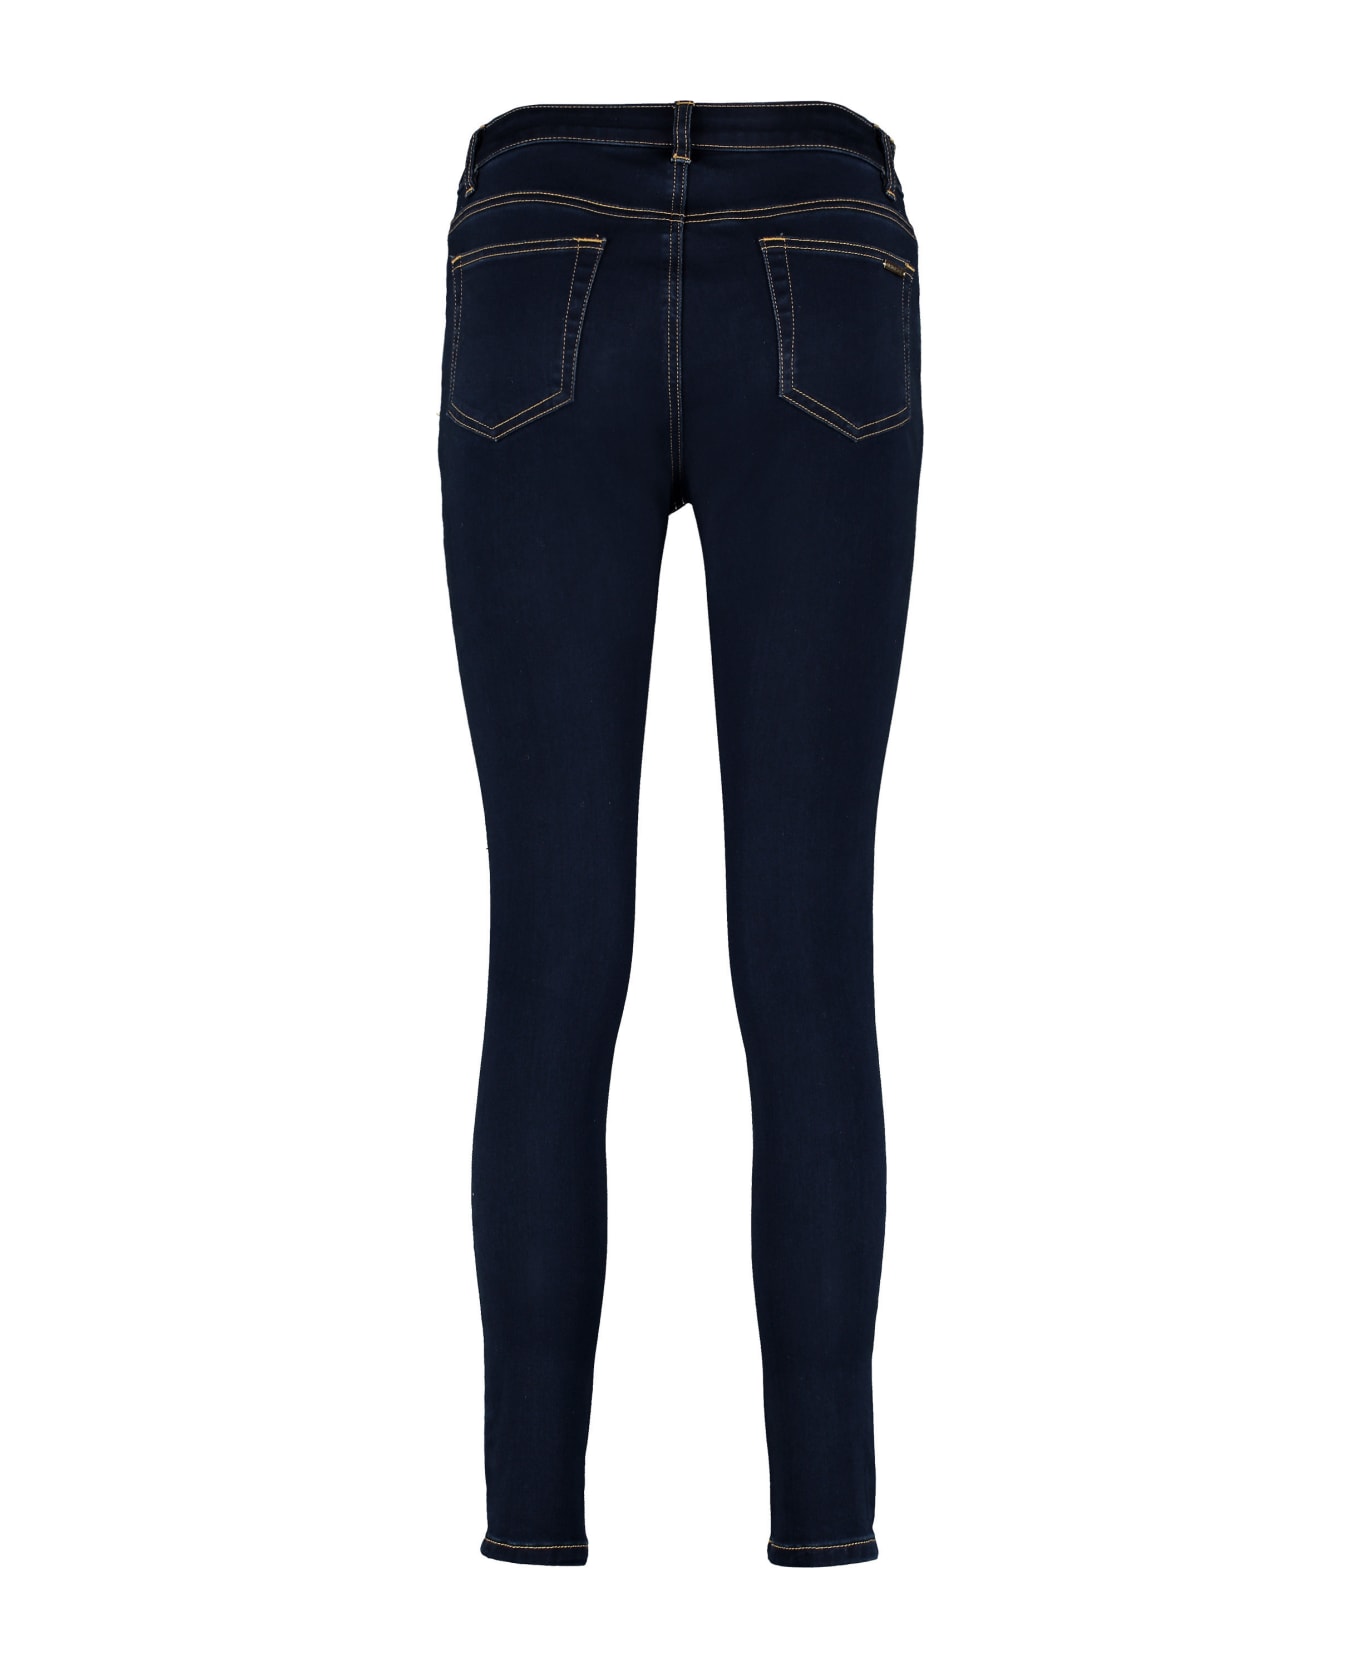 Michael Kors 5-pocket Skinny Jeans - Twilight Wsh